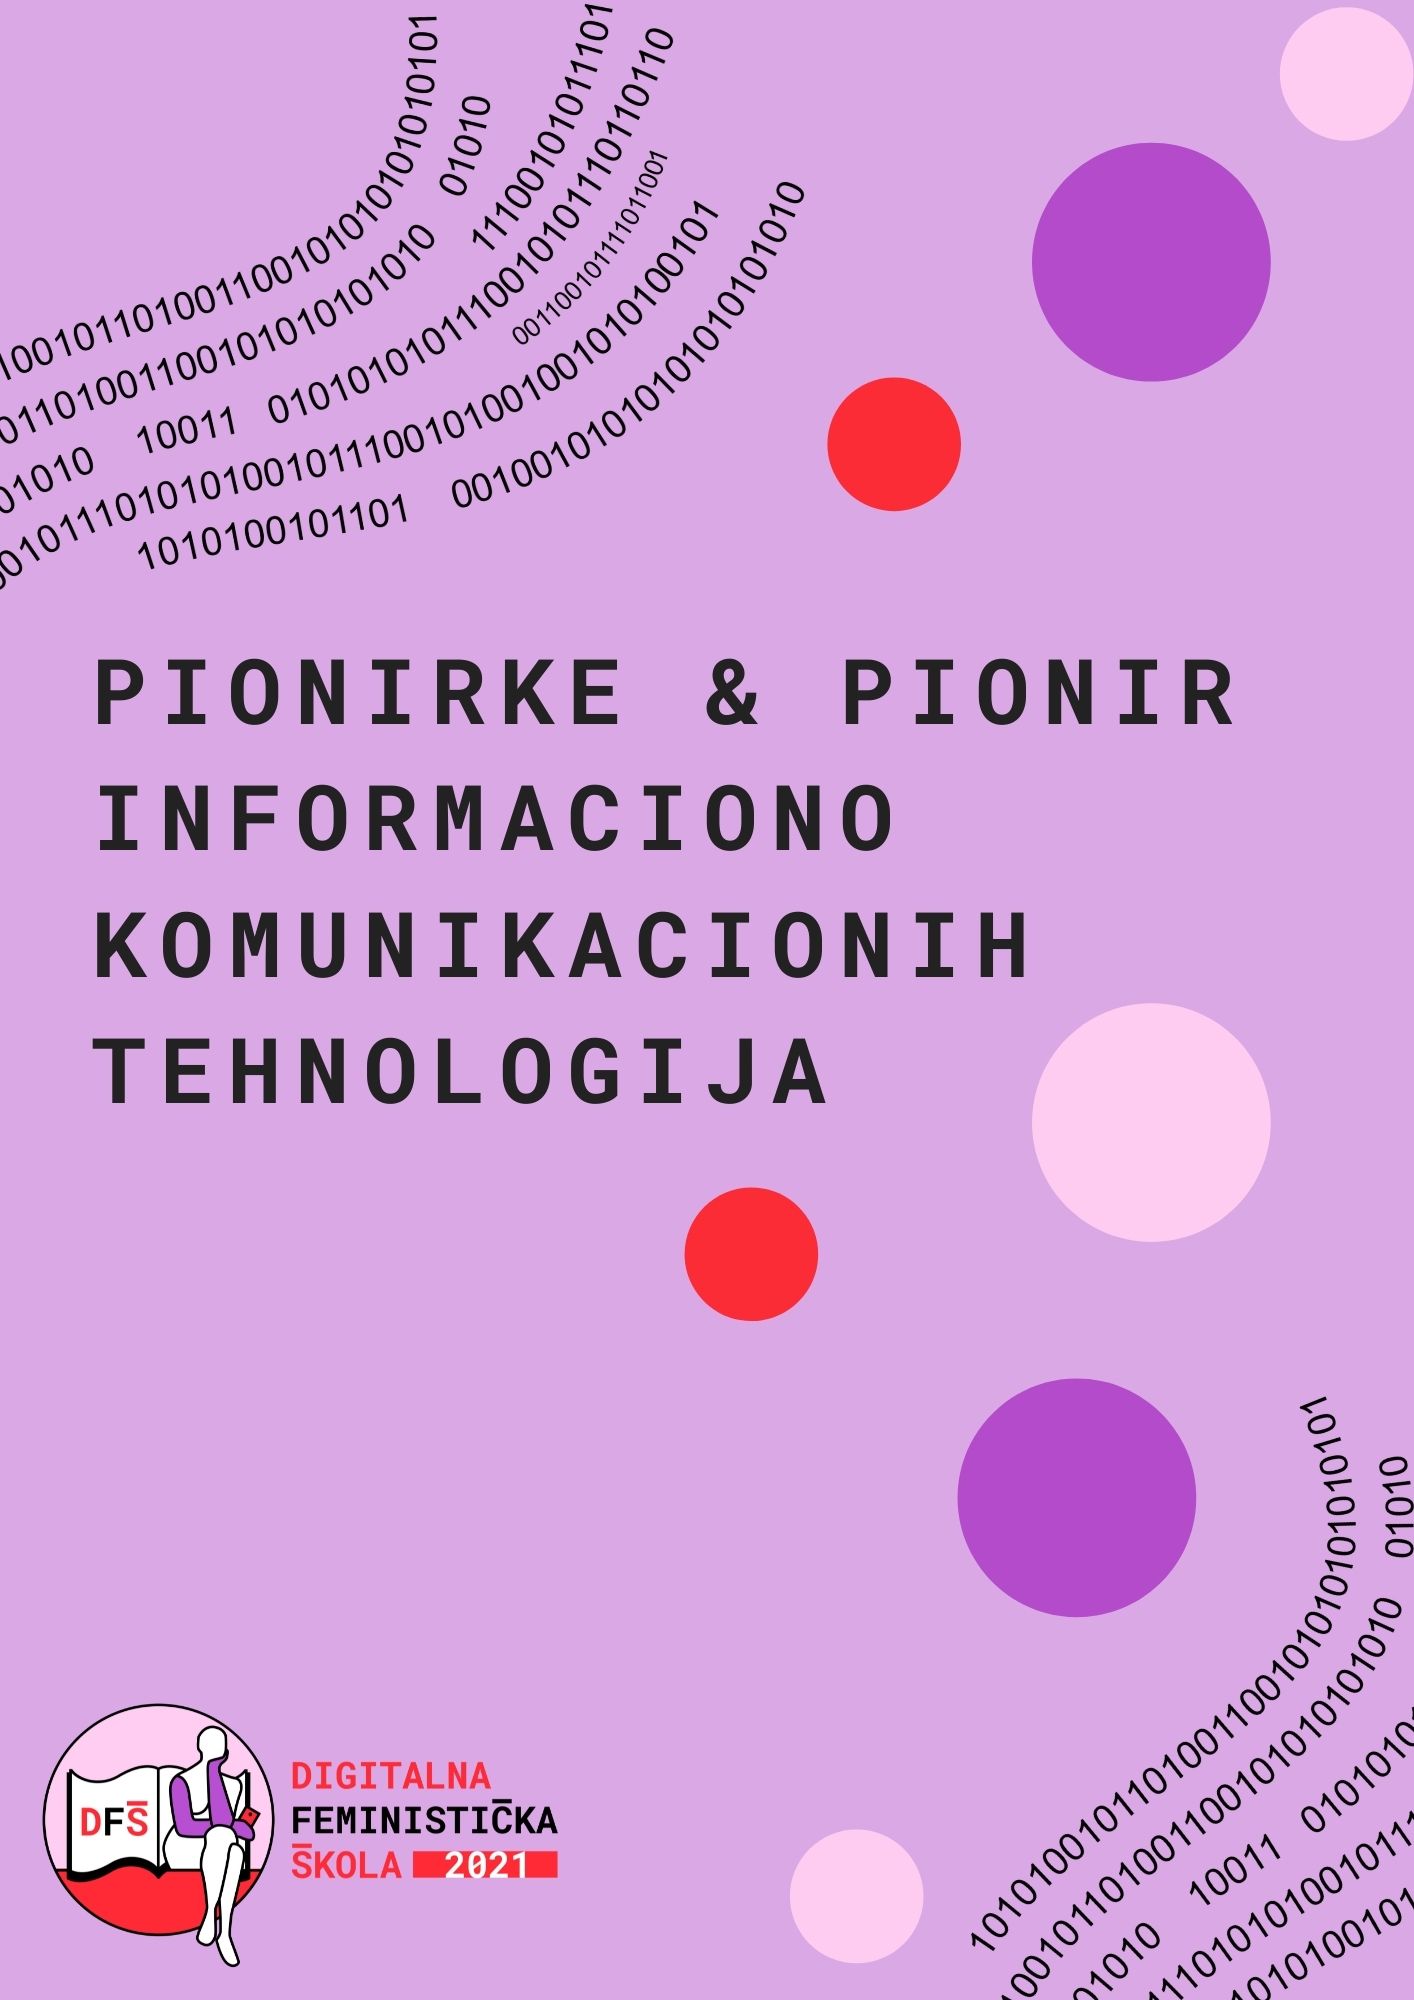 PIONIRKE PIONIR IKT